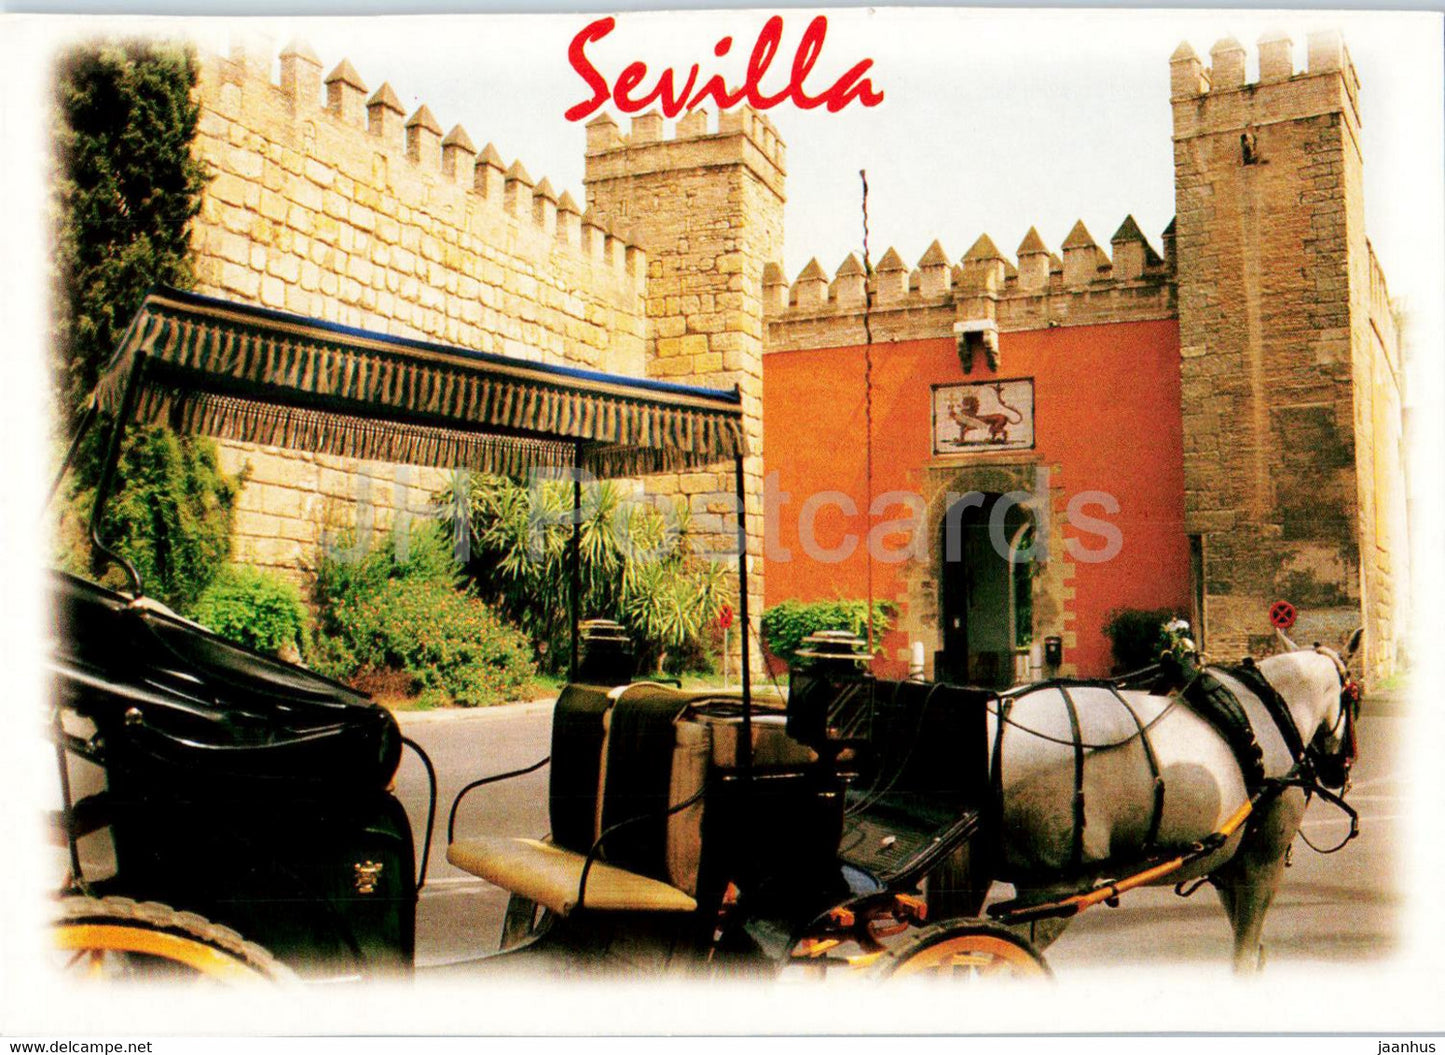 Sevilla - El Alcazar - Puerta del Leon - castle - Gate of Lion - horse - 7 - Spain - unused - JH Postcards